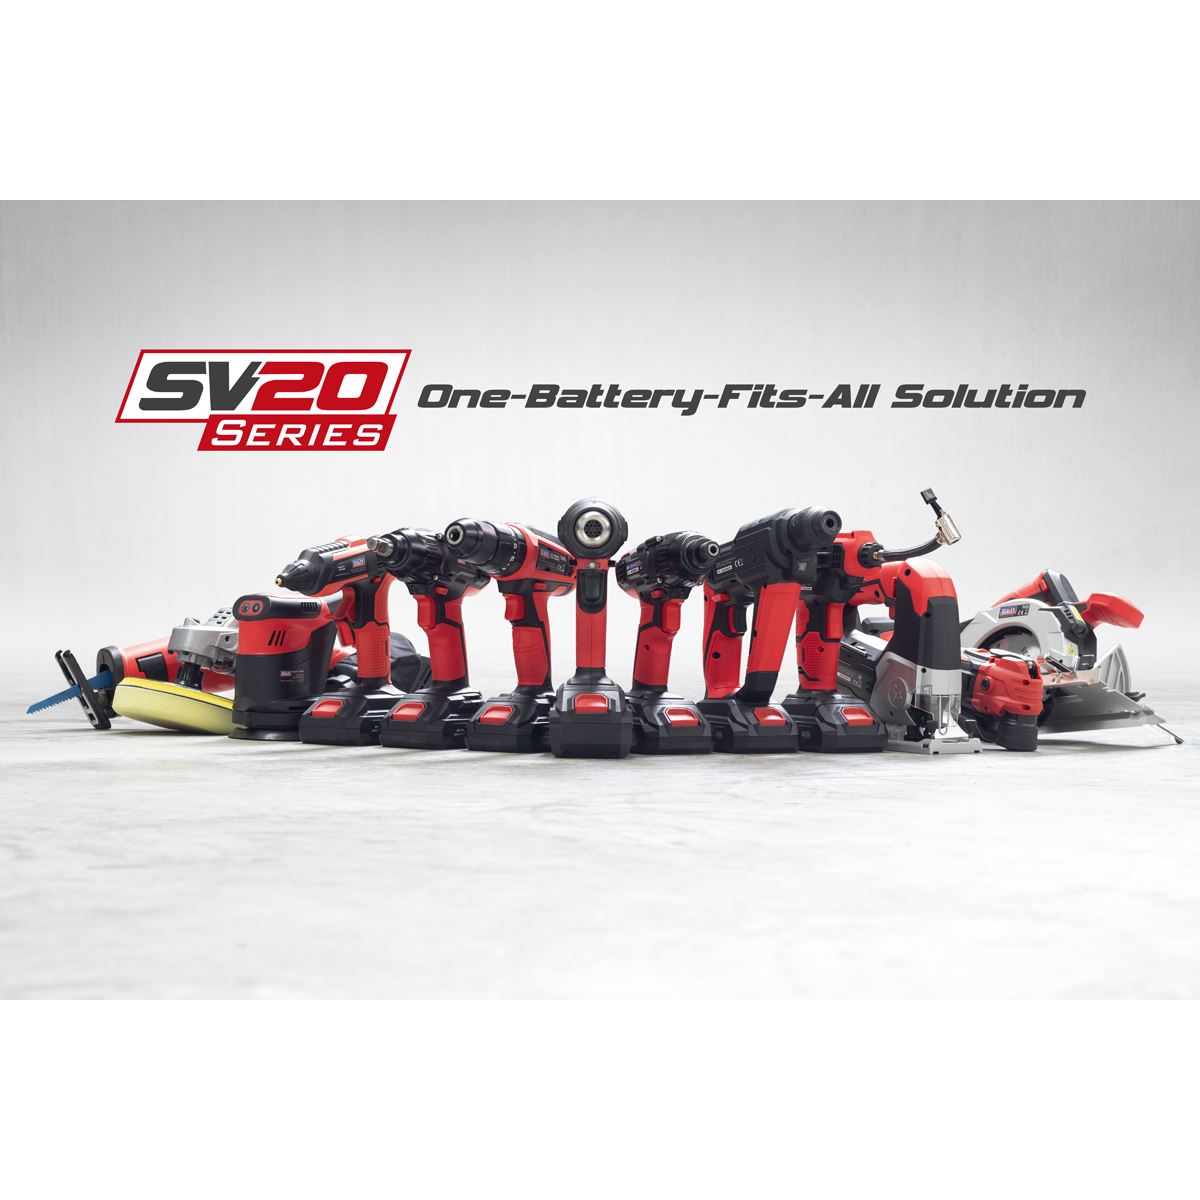 Sealey Cordless Pruning Shears Kit 20V 2Ah SV20 Series - 2 Batteries